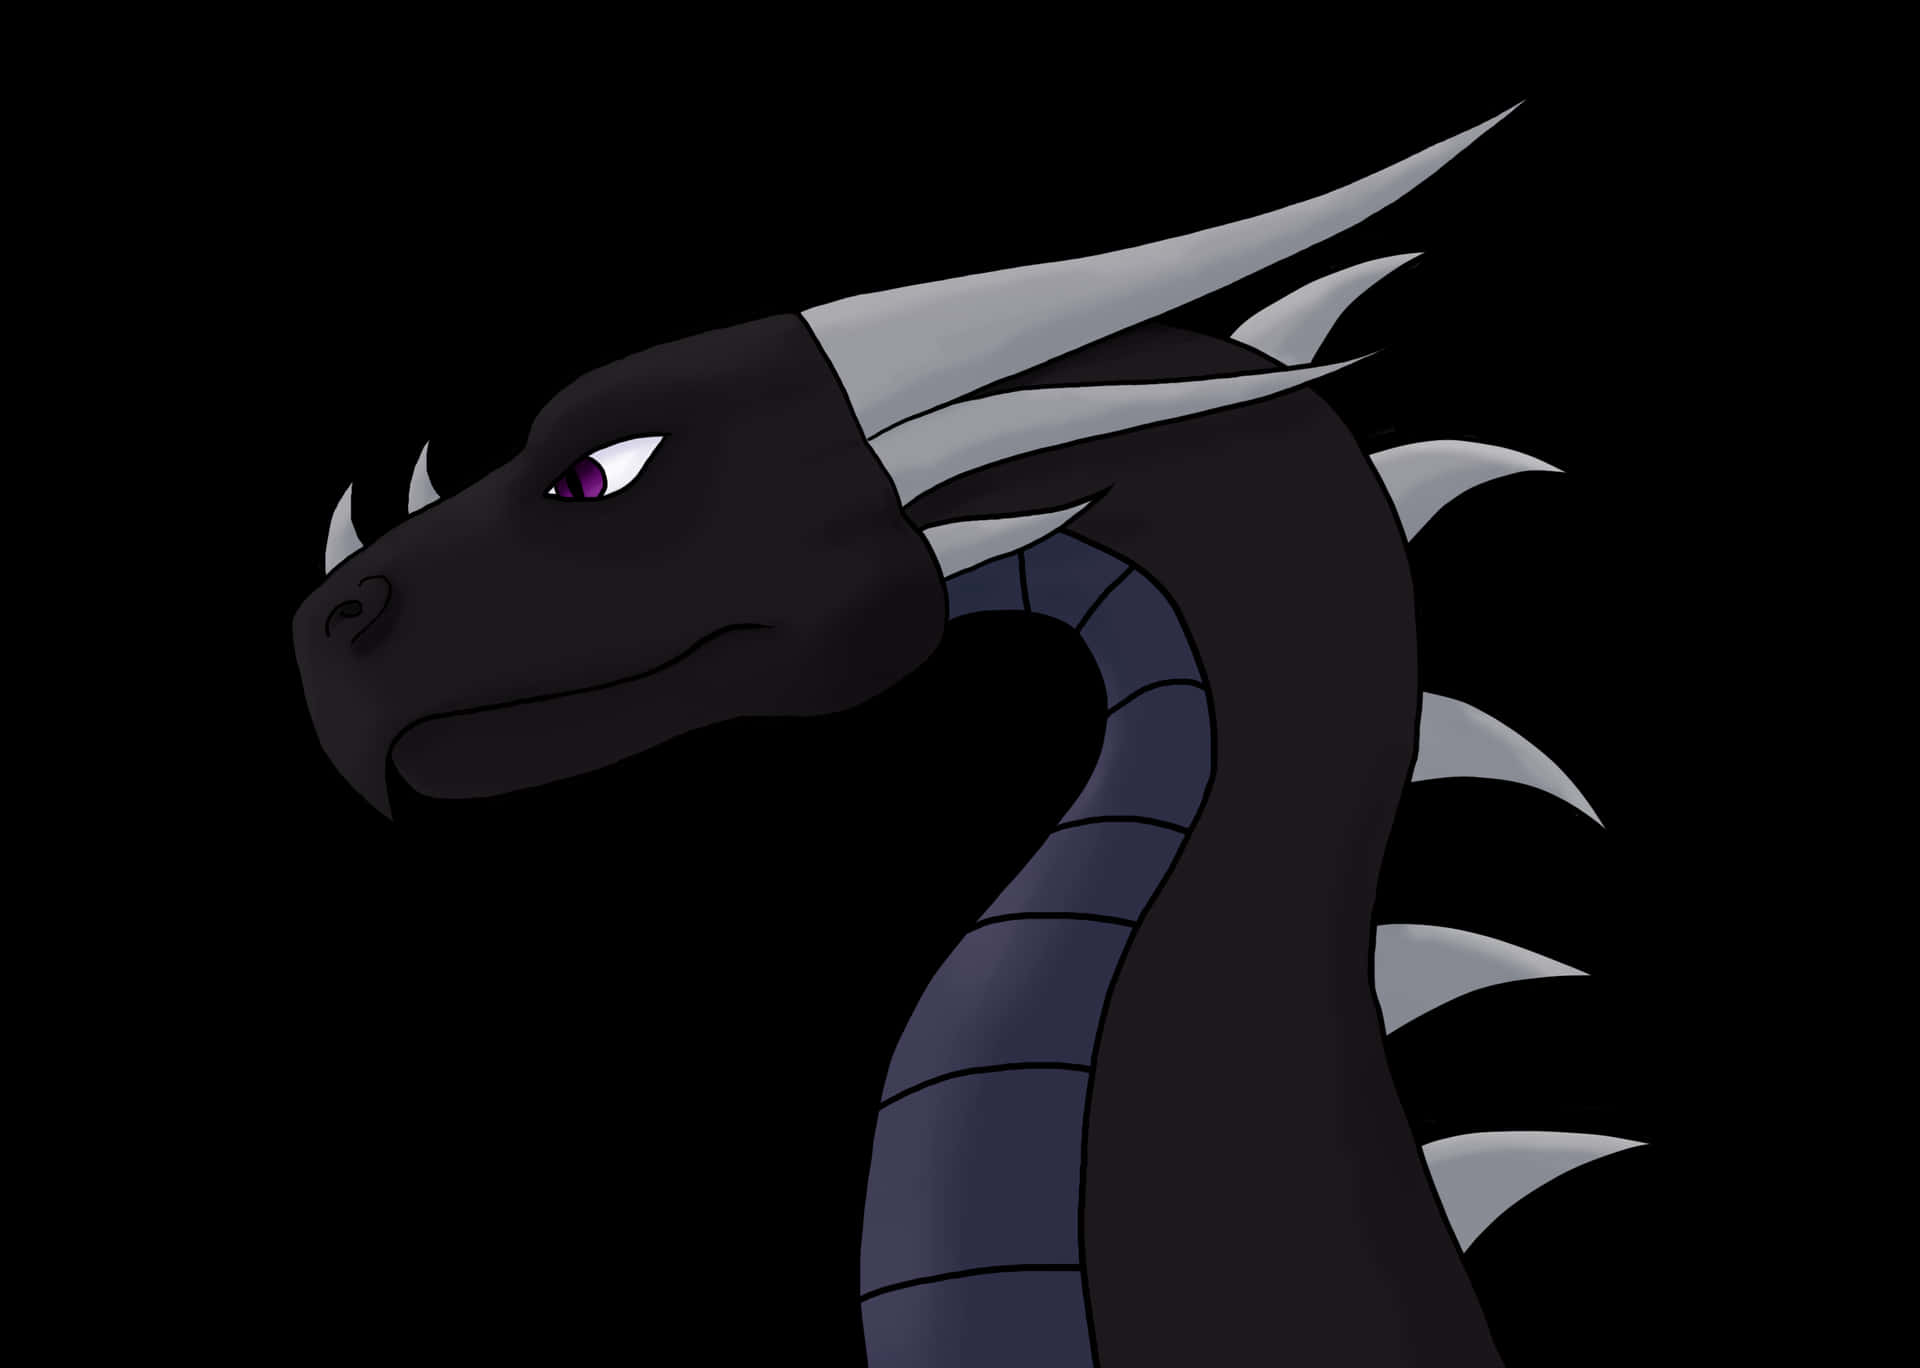 An ebony dragon, keeping watch from its high vantage